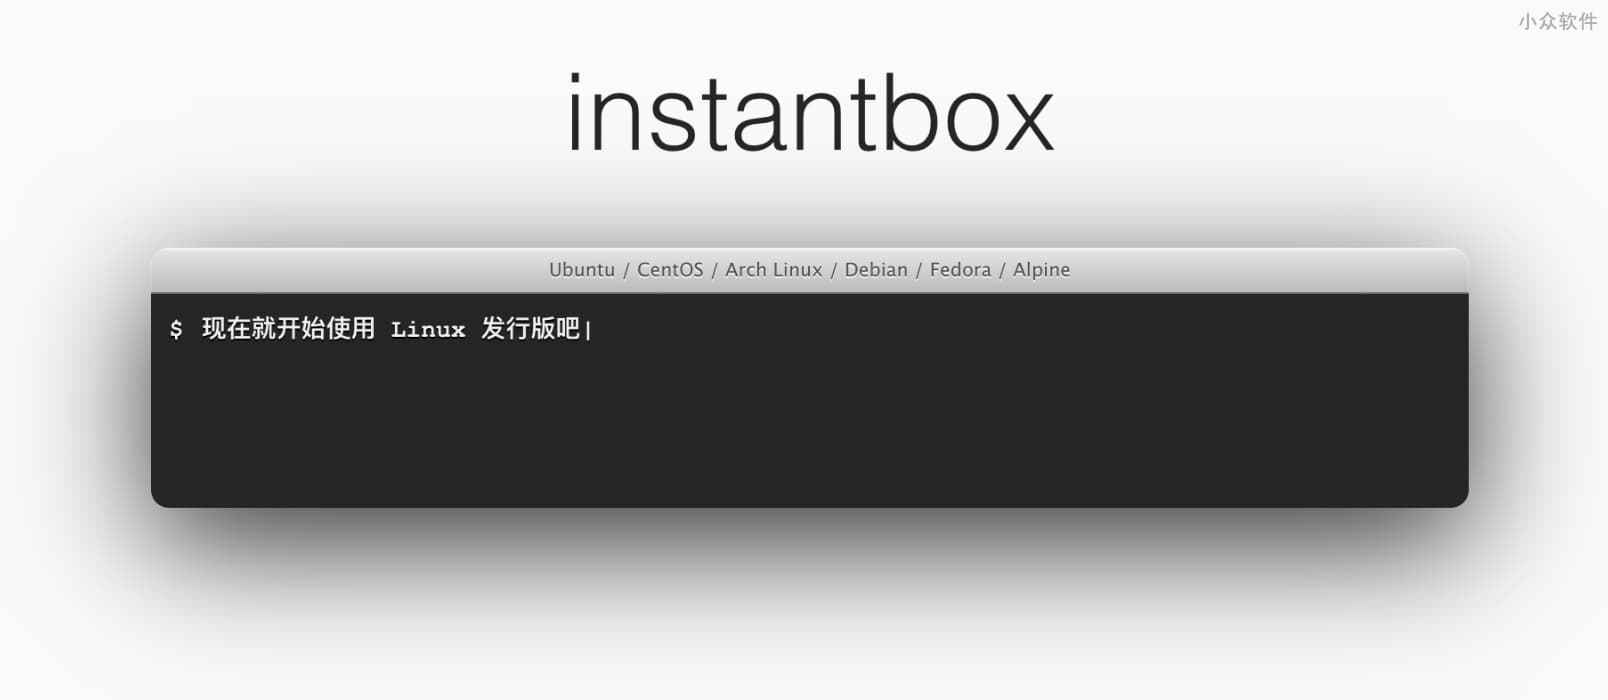 instantbox – 几秒内启动一个干净的 Linux 系统